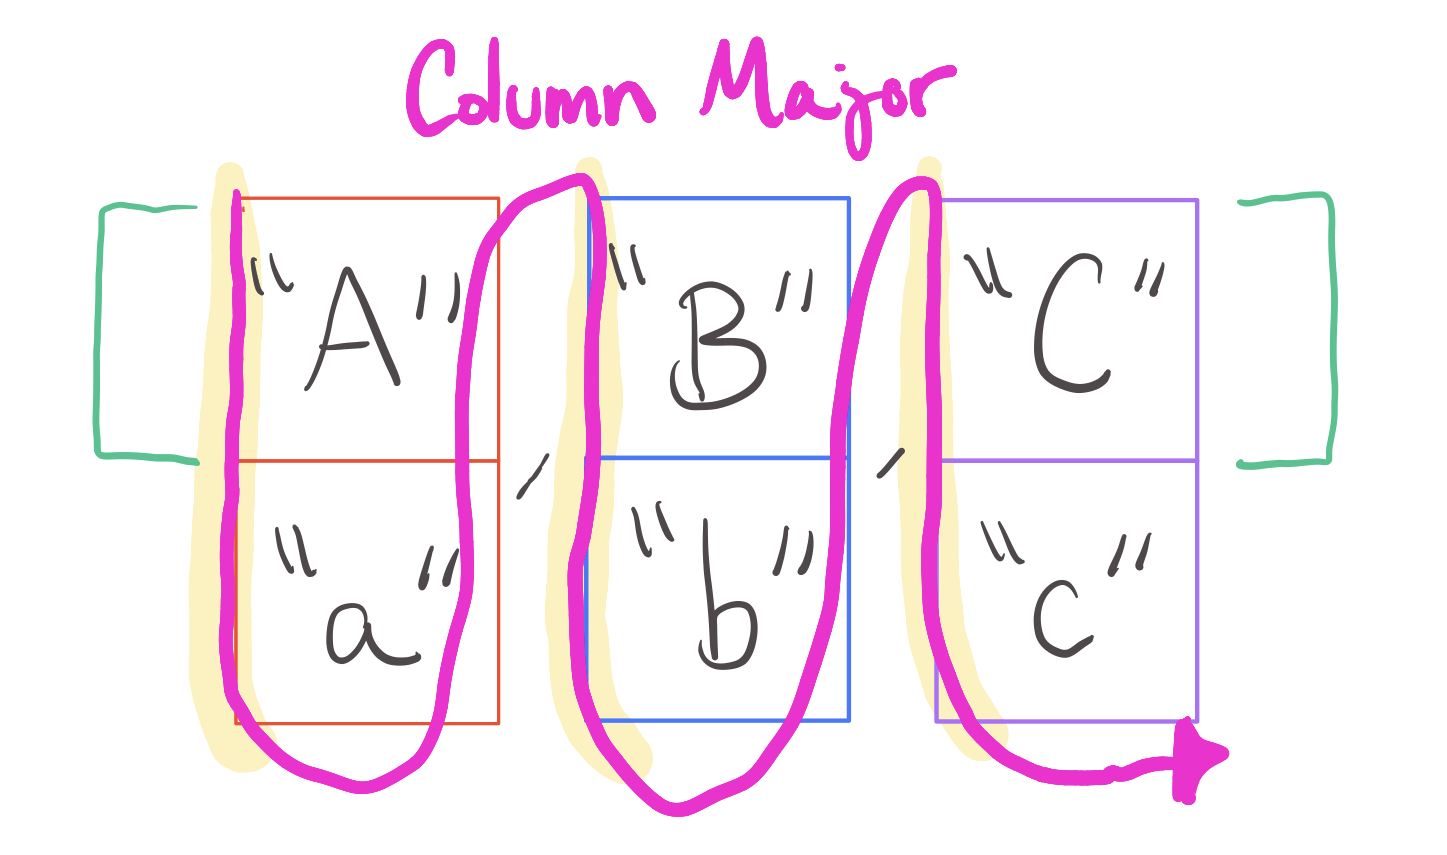 Column-Major Traversal